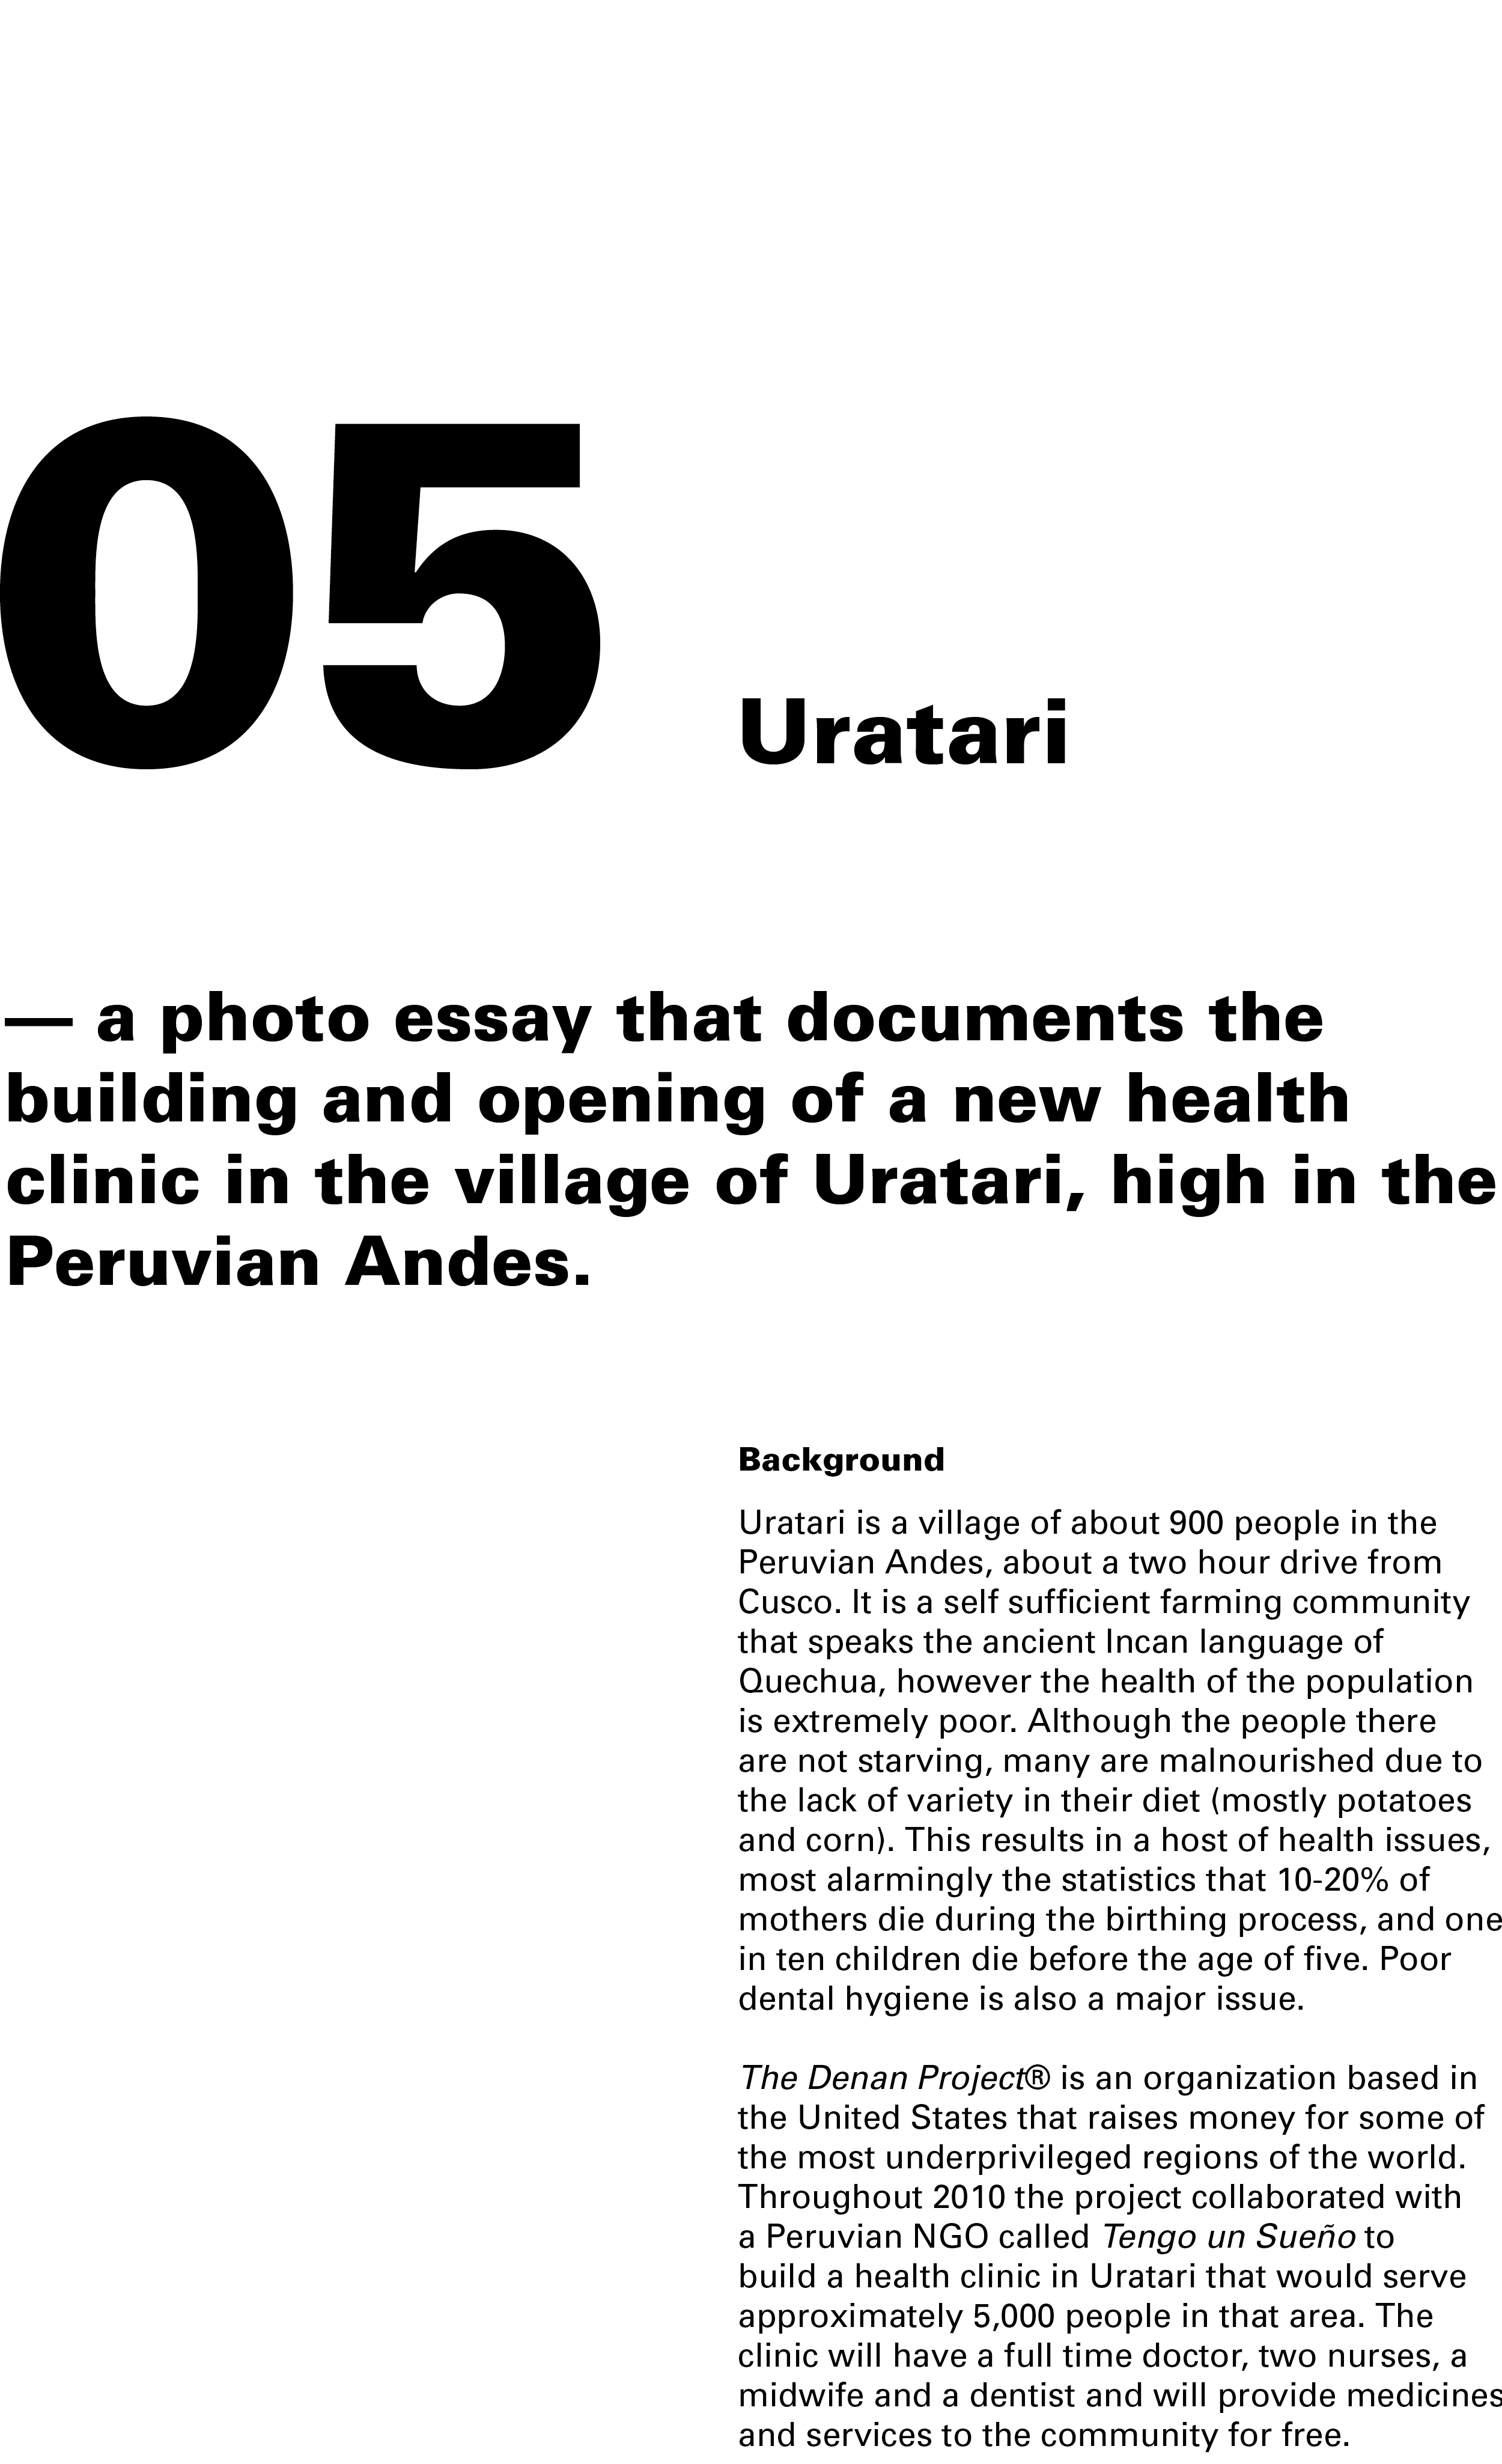 UratariText.jpg